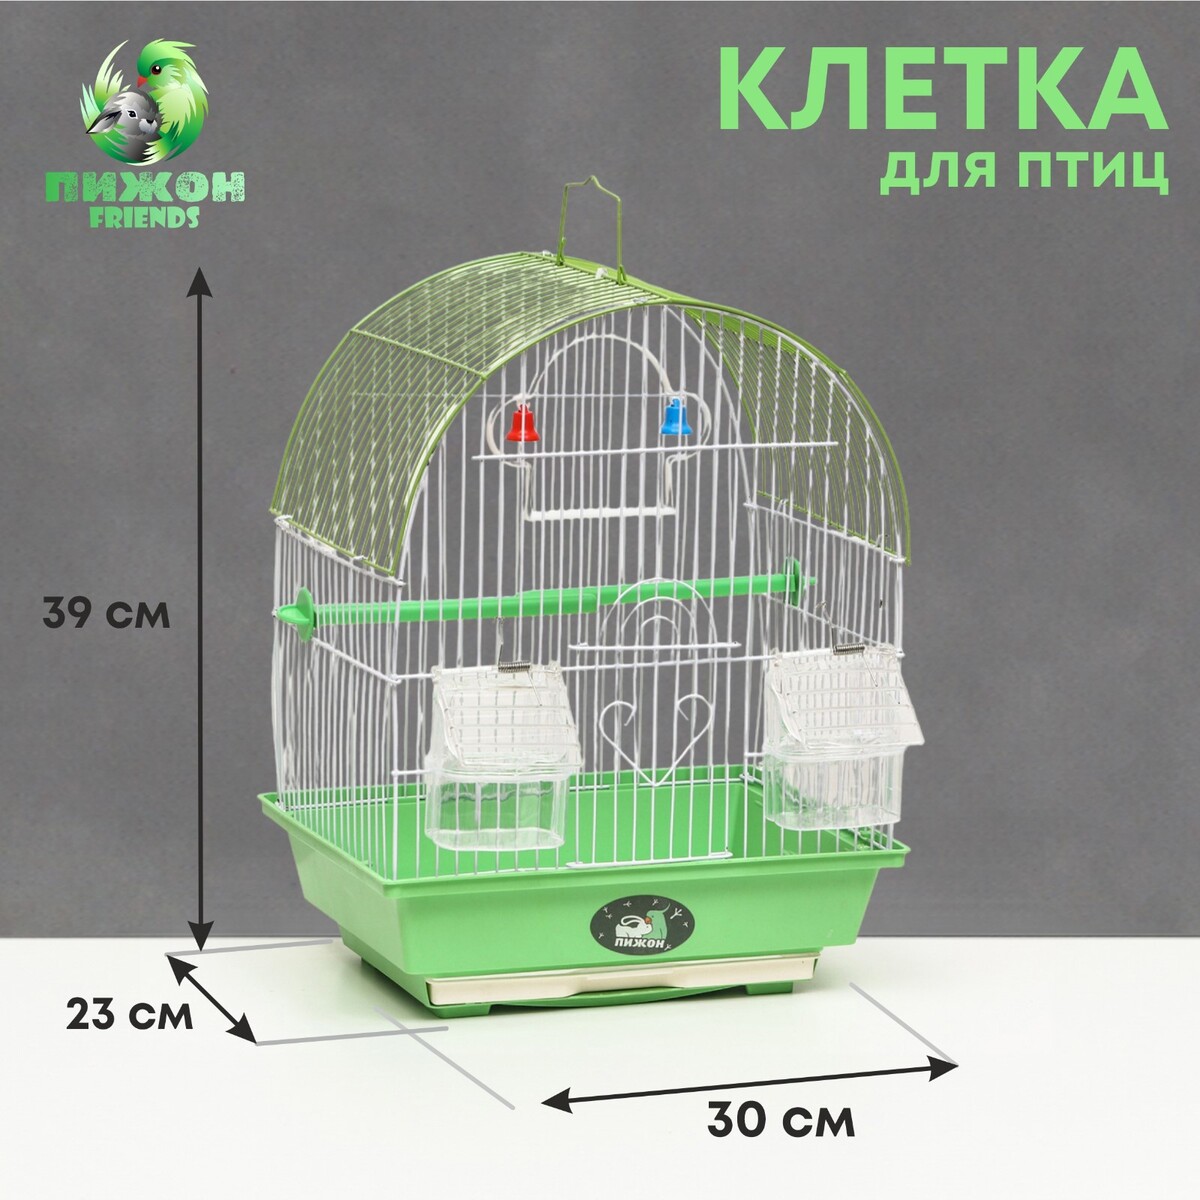 Клетка для птиц укомплектованная bd-1/3c, 30 х 23 х 39 см, зеленая